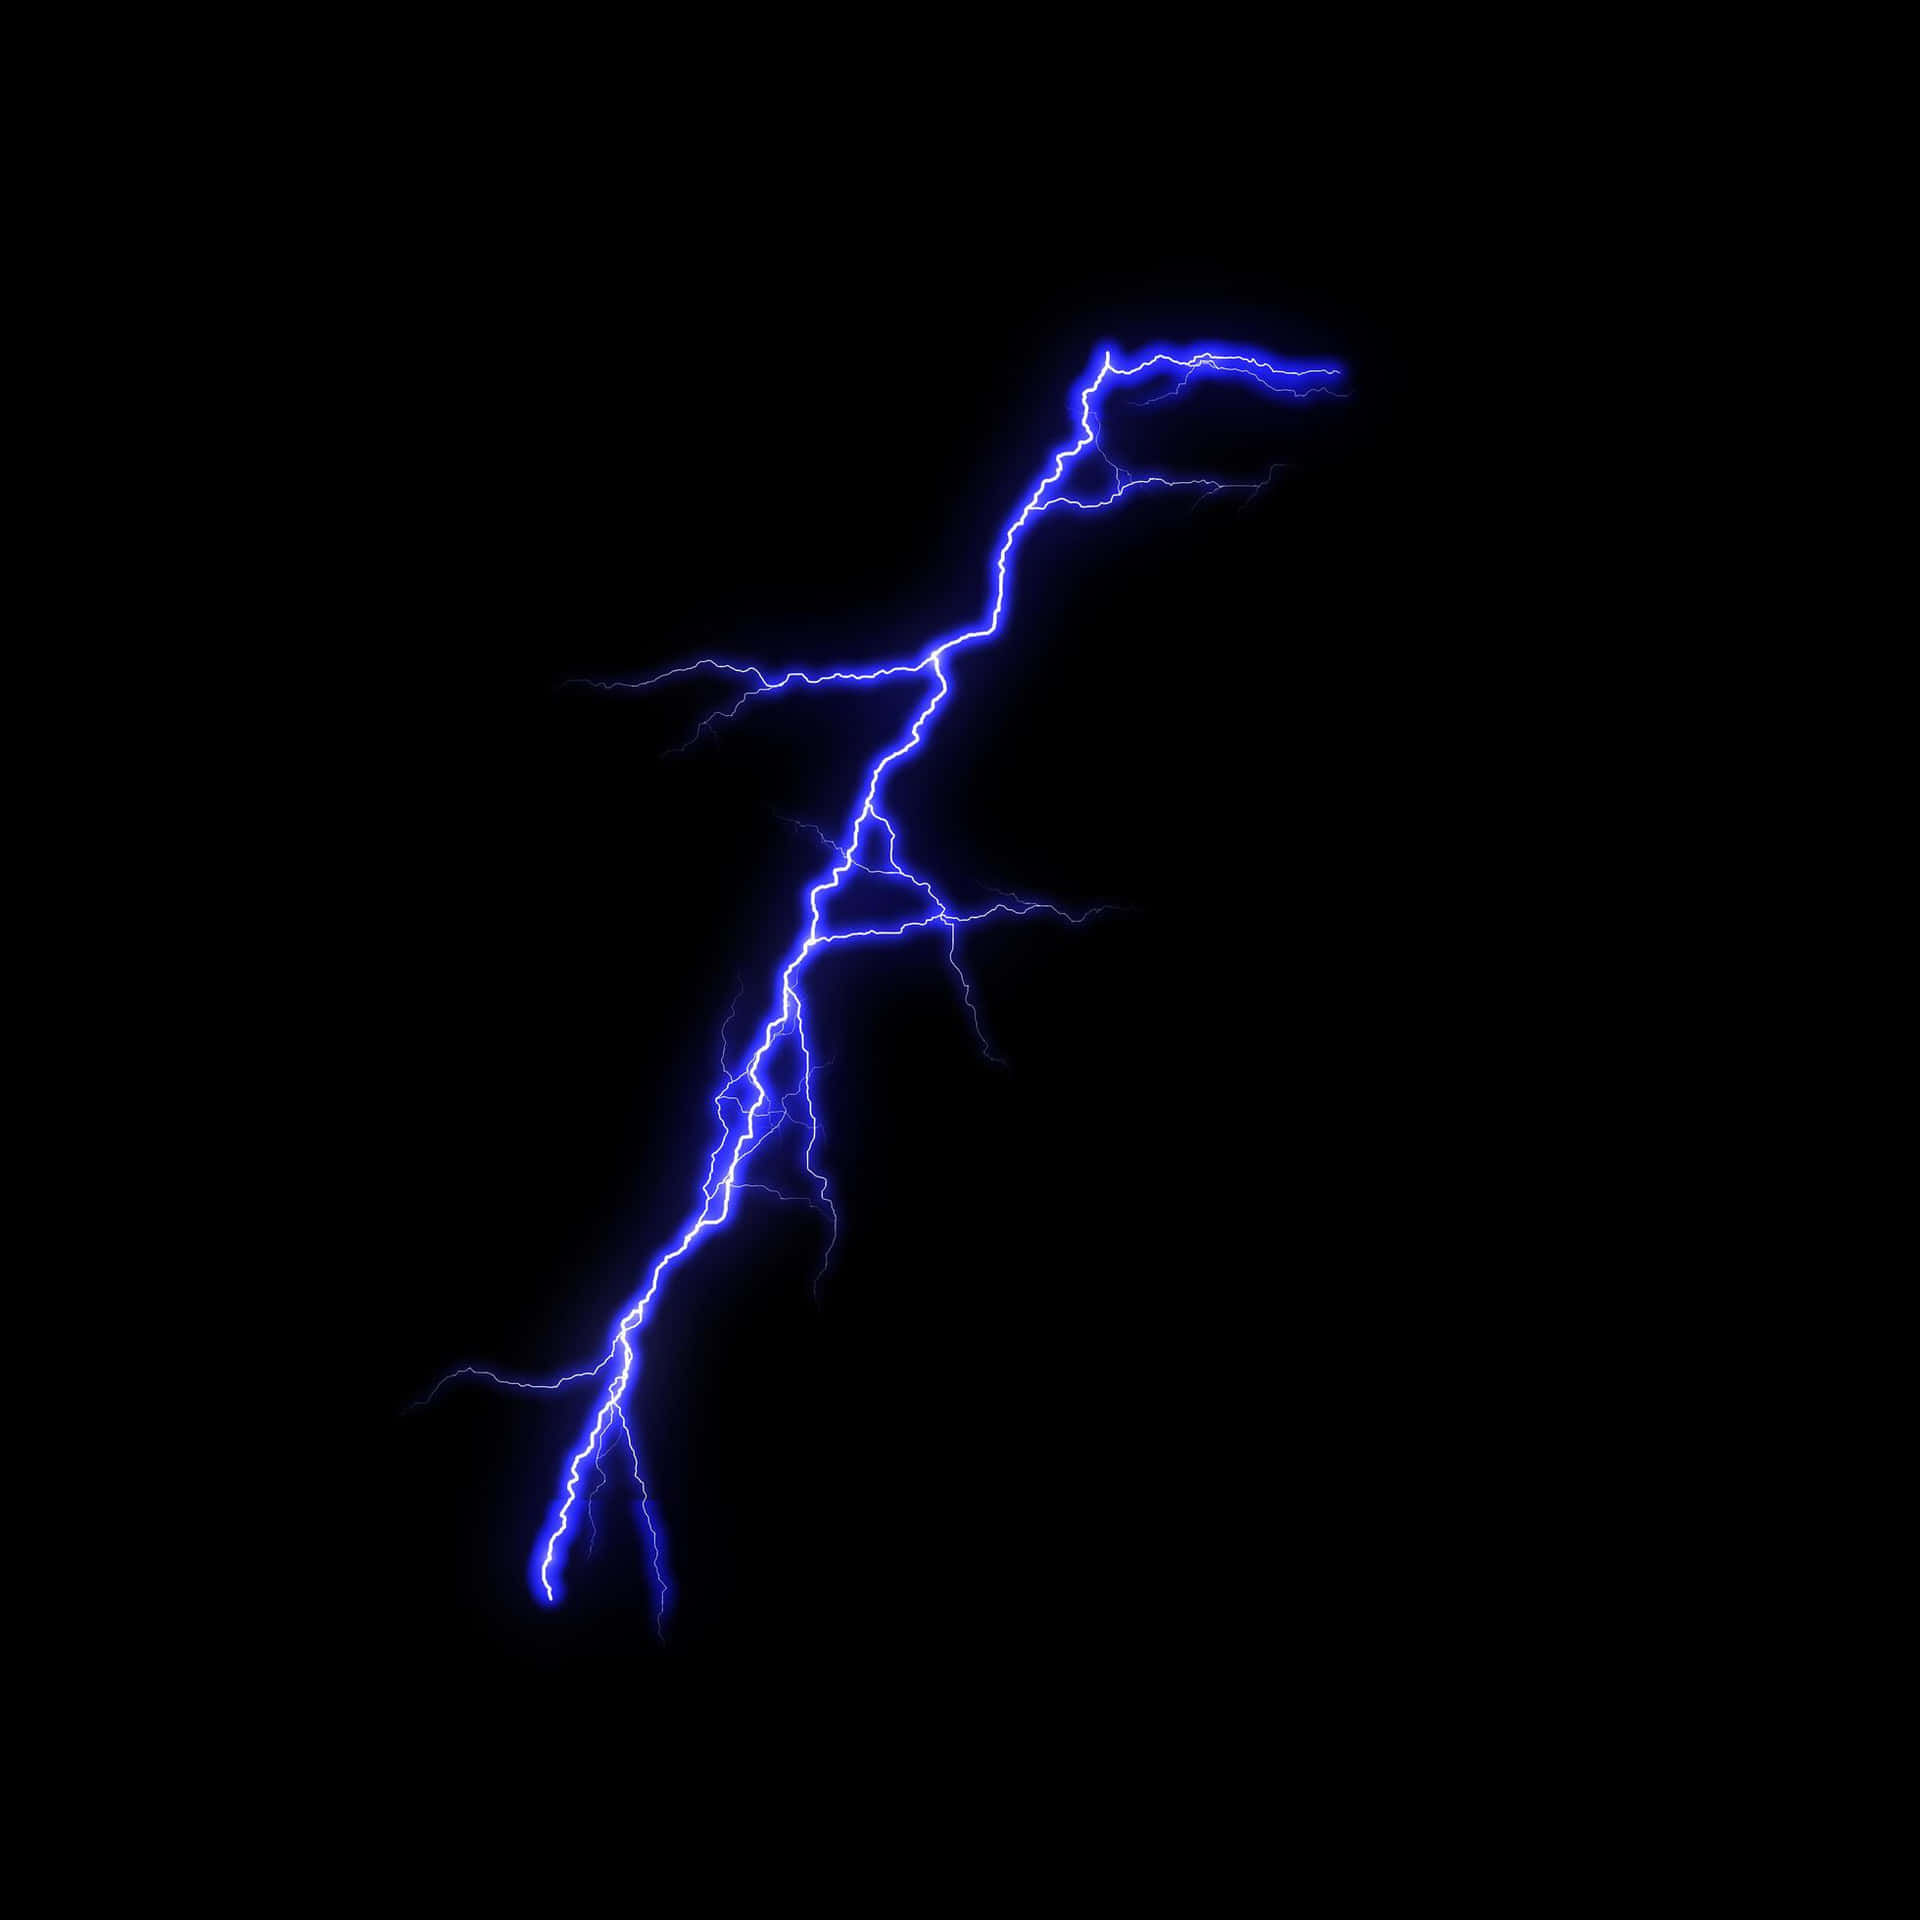 A bolt of blue electricity illuminating the night sky